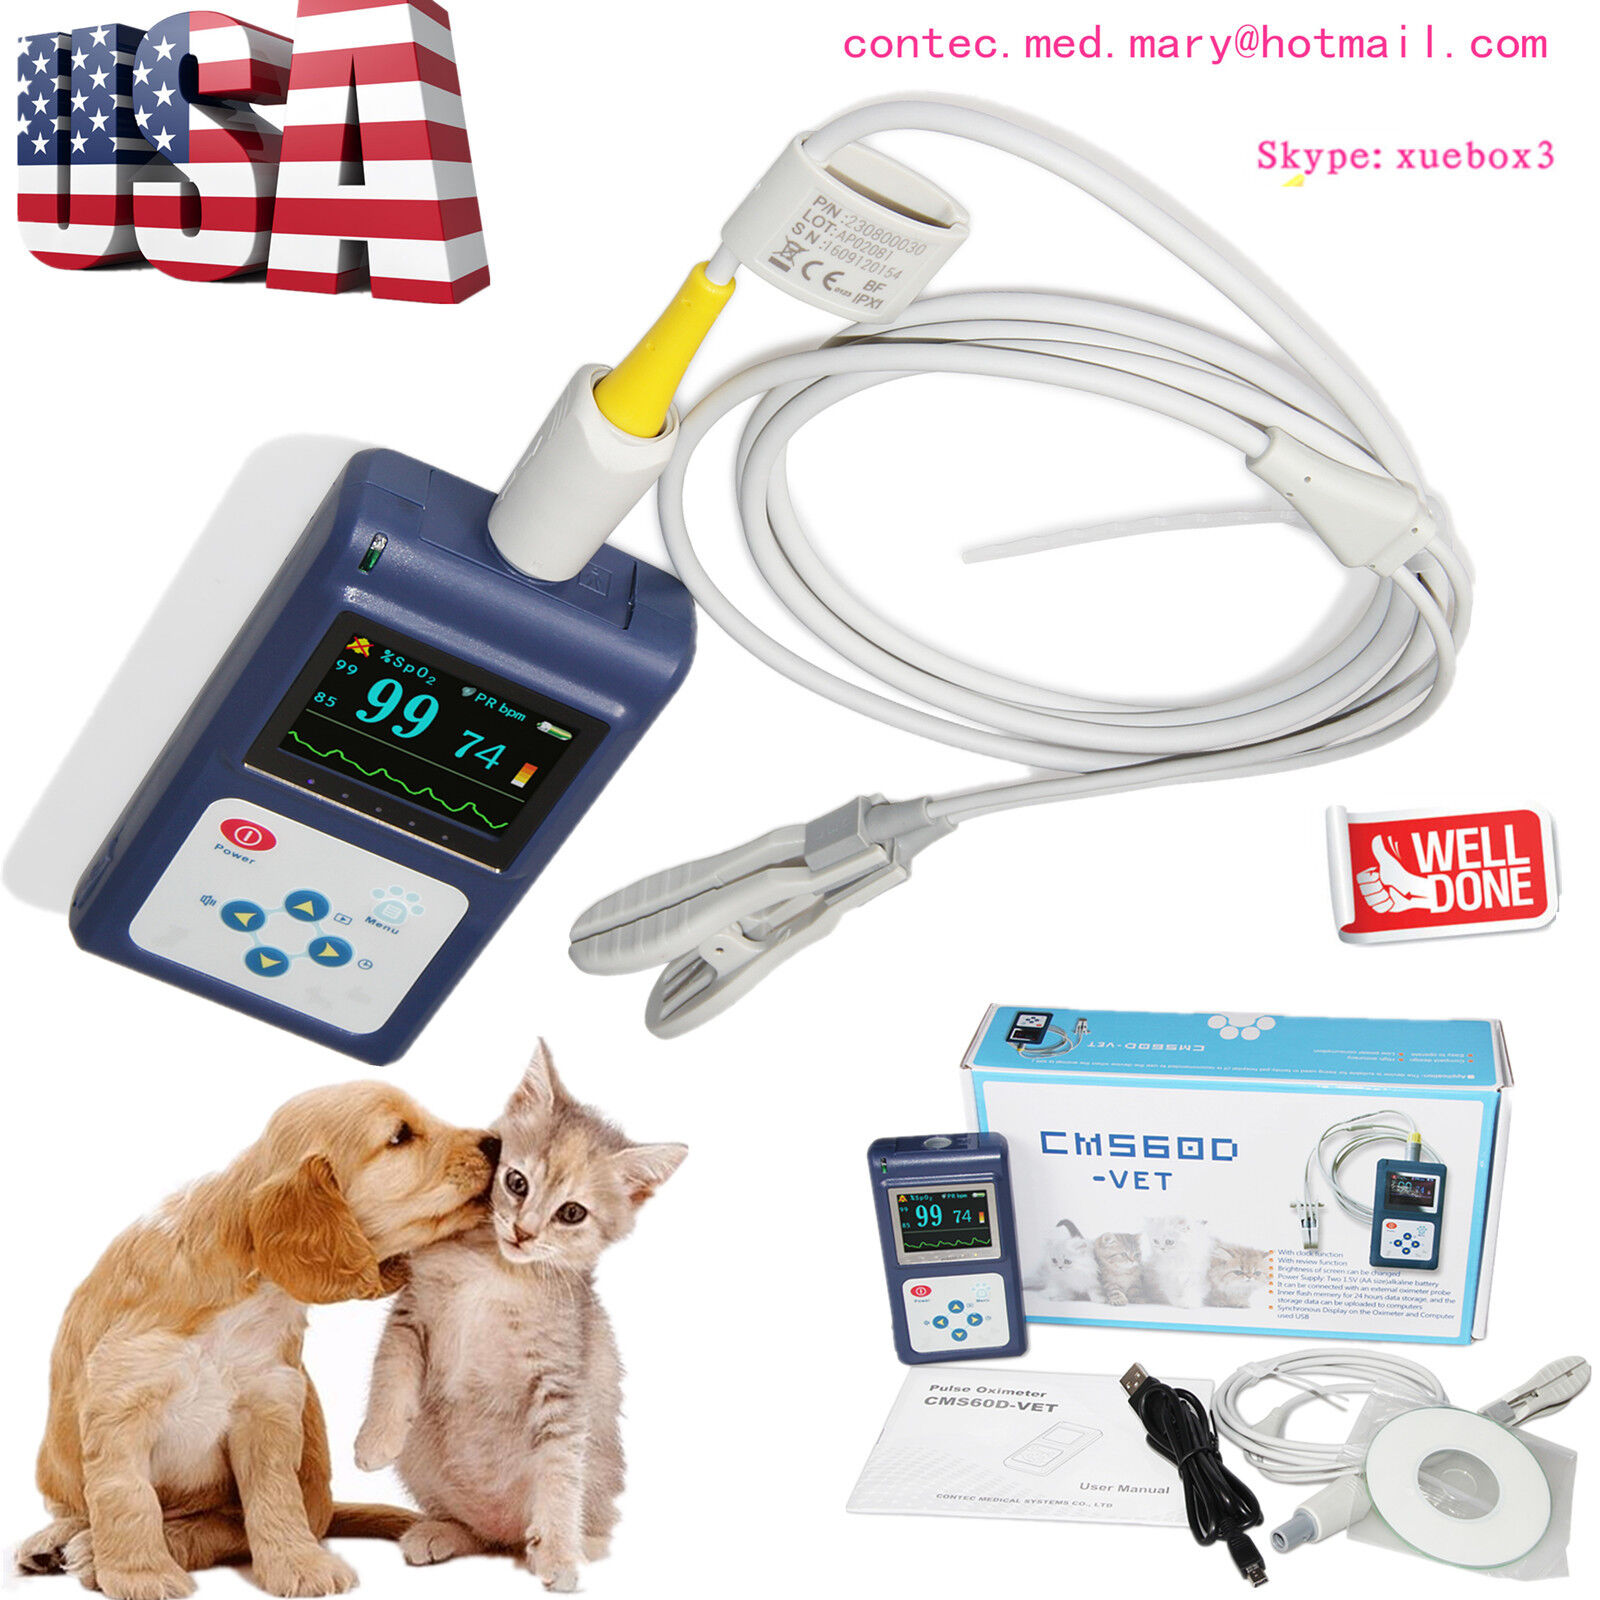 CONTEC Veterinary Handheld CMS60D-Vet Pulse tester pulse oxygen saturation,Hot